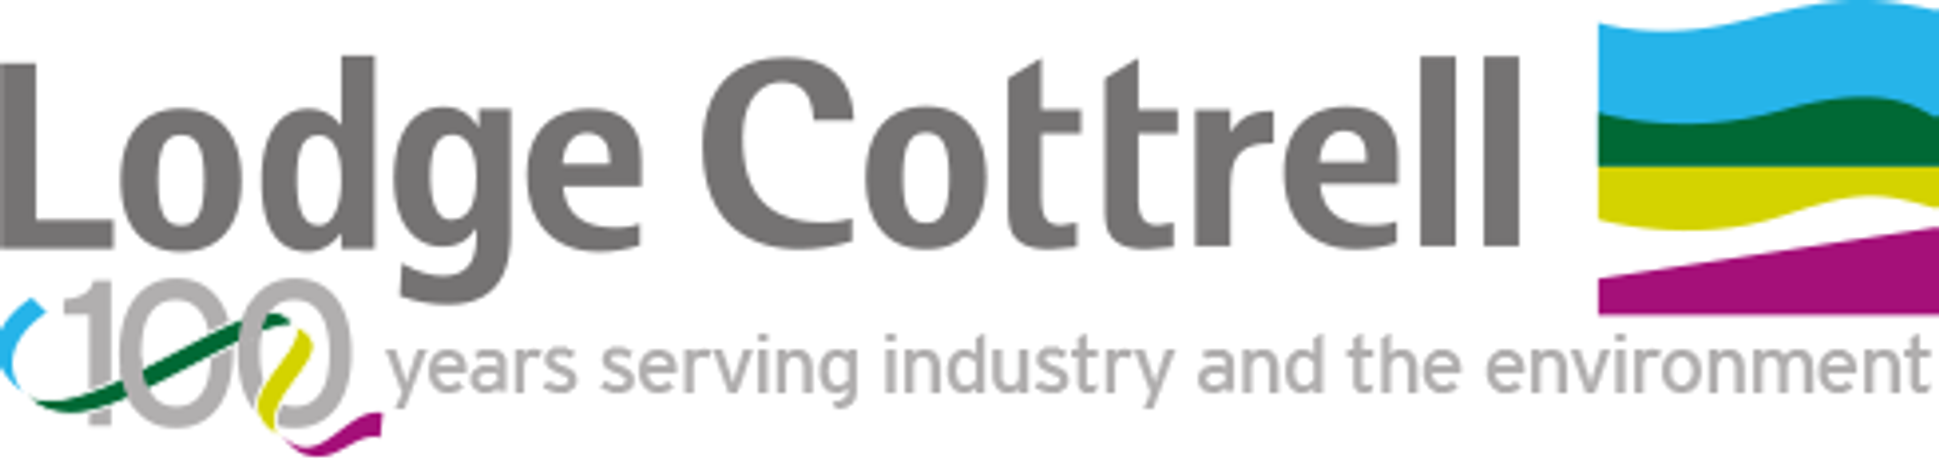 Lodge Cottrell - Barrier Filter Spares